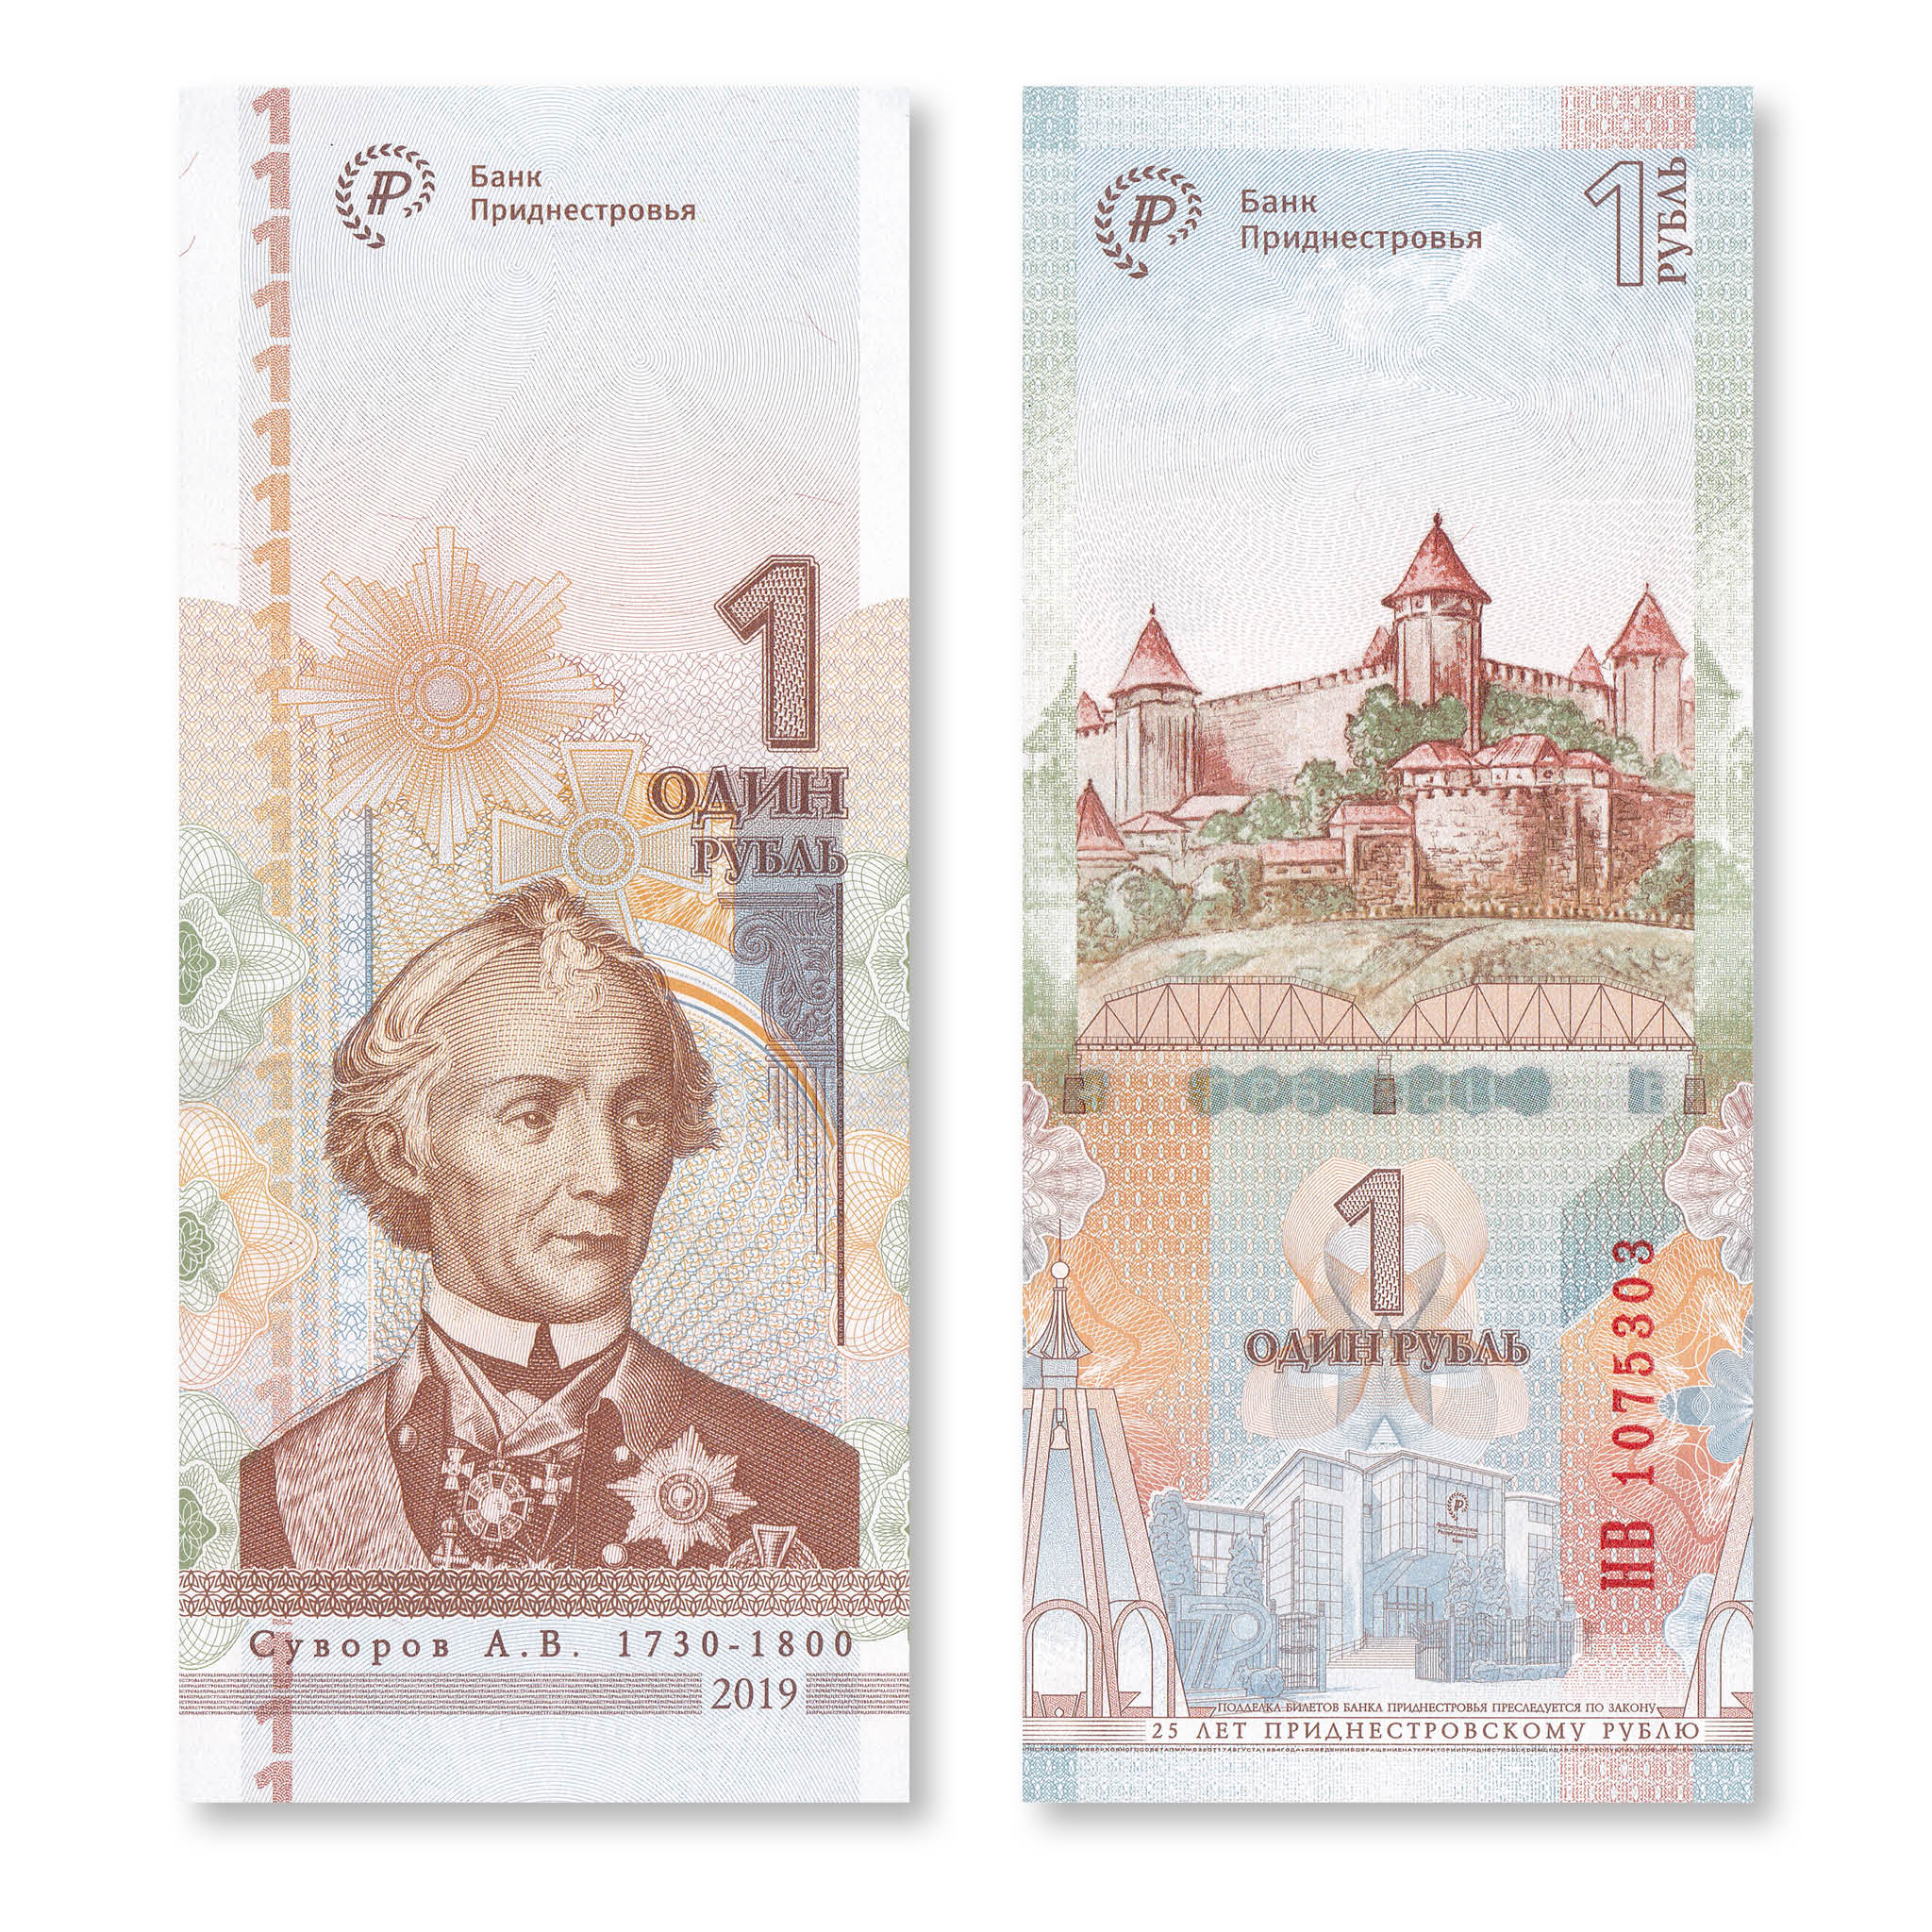 Transdniestria 1 Ruble, 2019, B225a, UNC - Robert's World Money - World Banknotes